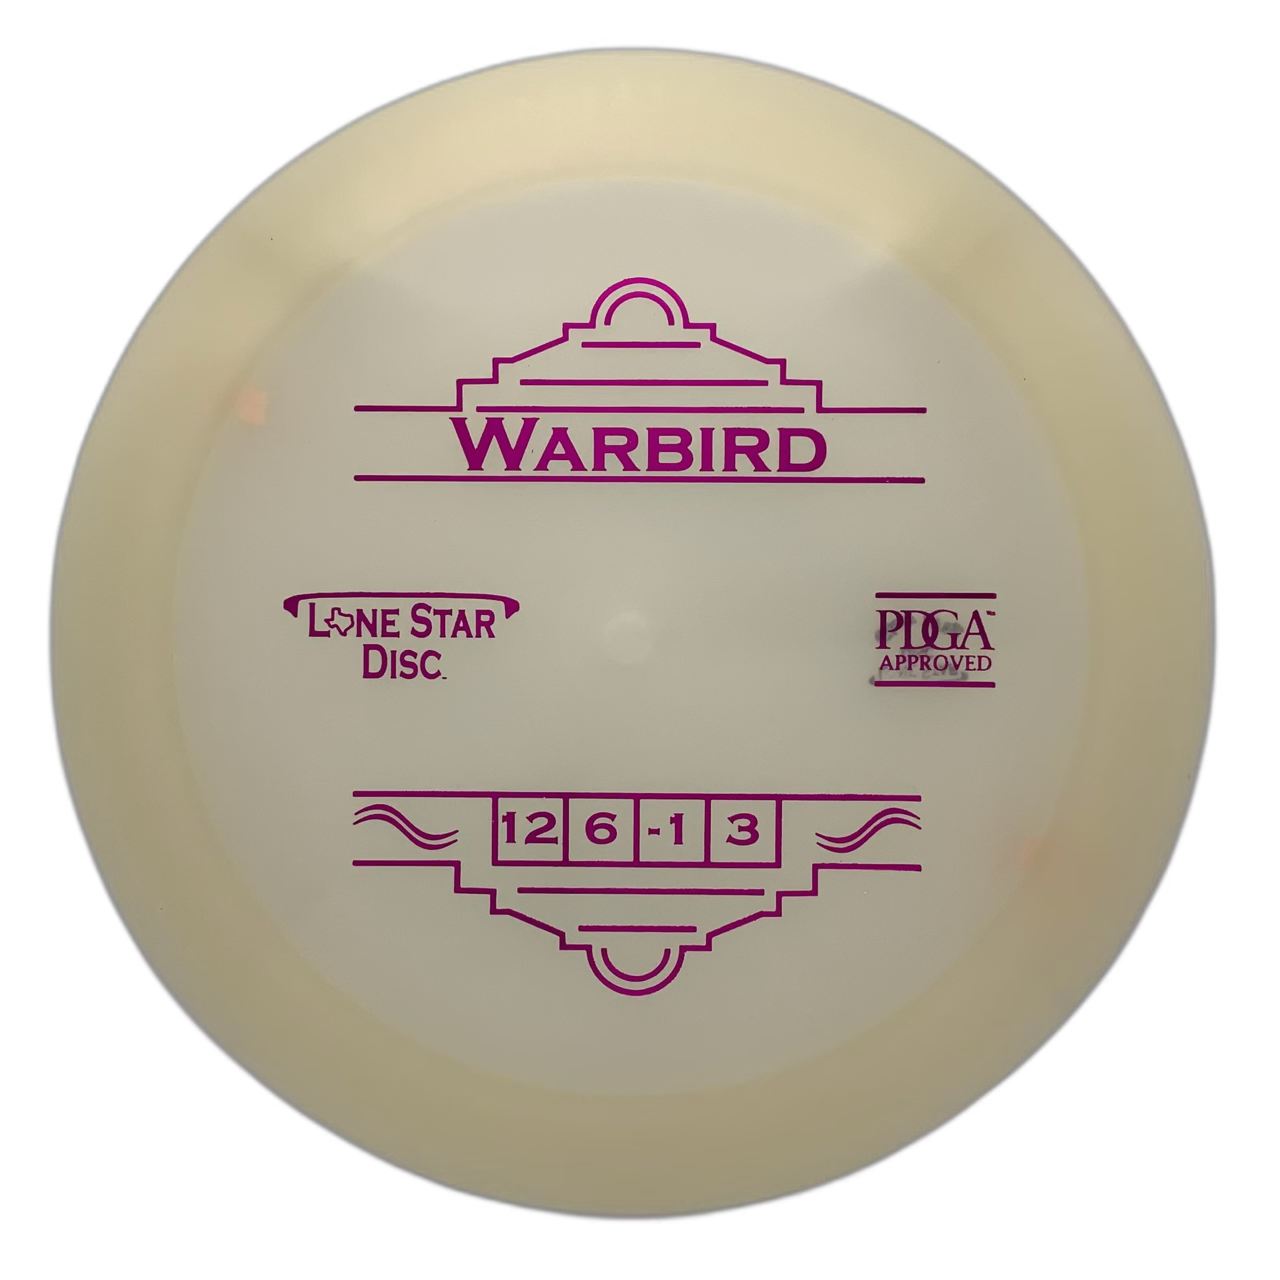 Lone Star Glow Warbird - Astro Discs TX - Houston Disc Golf